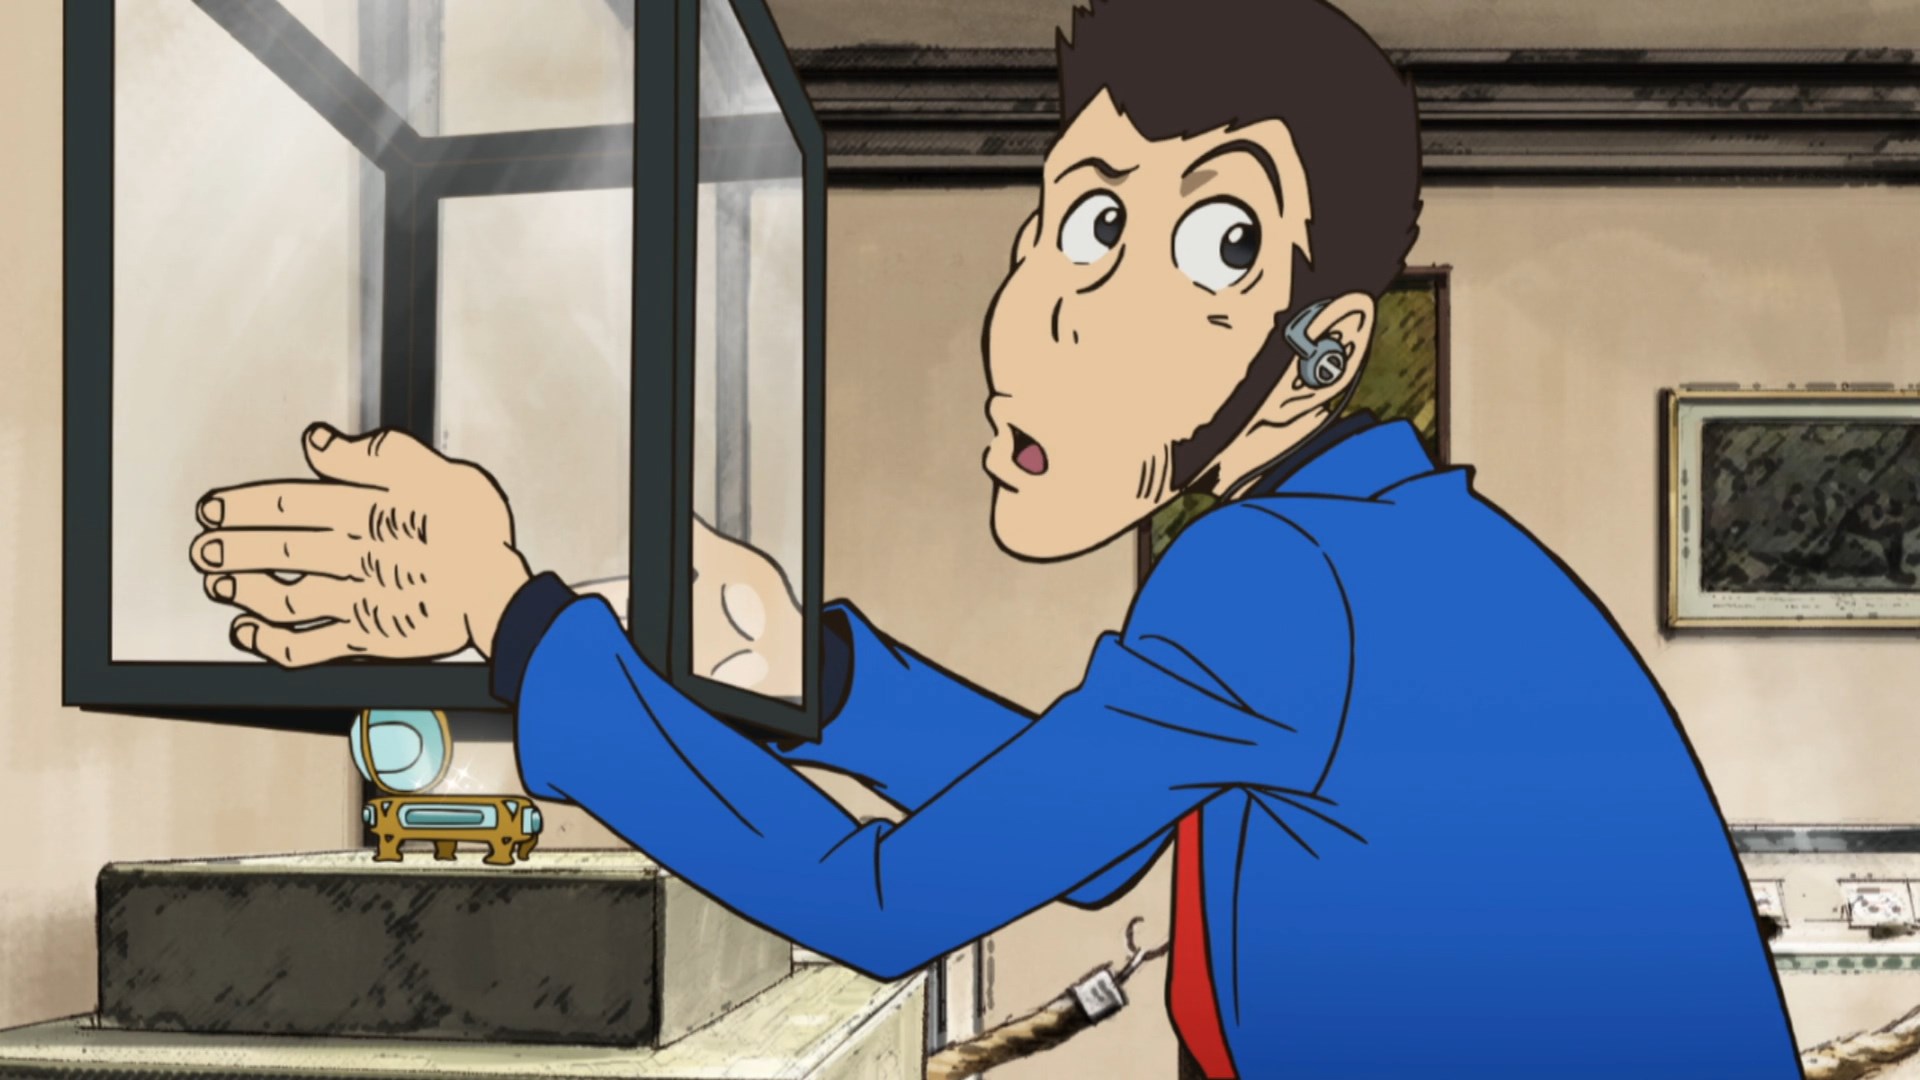 Fifth Lupin III Anime Series Revealed